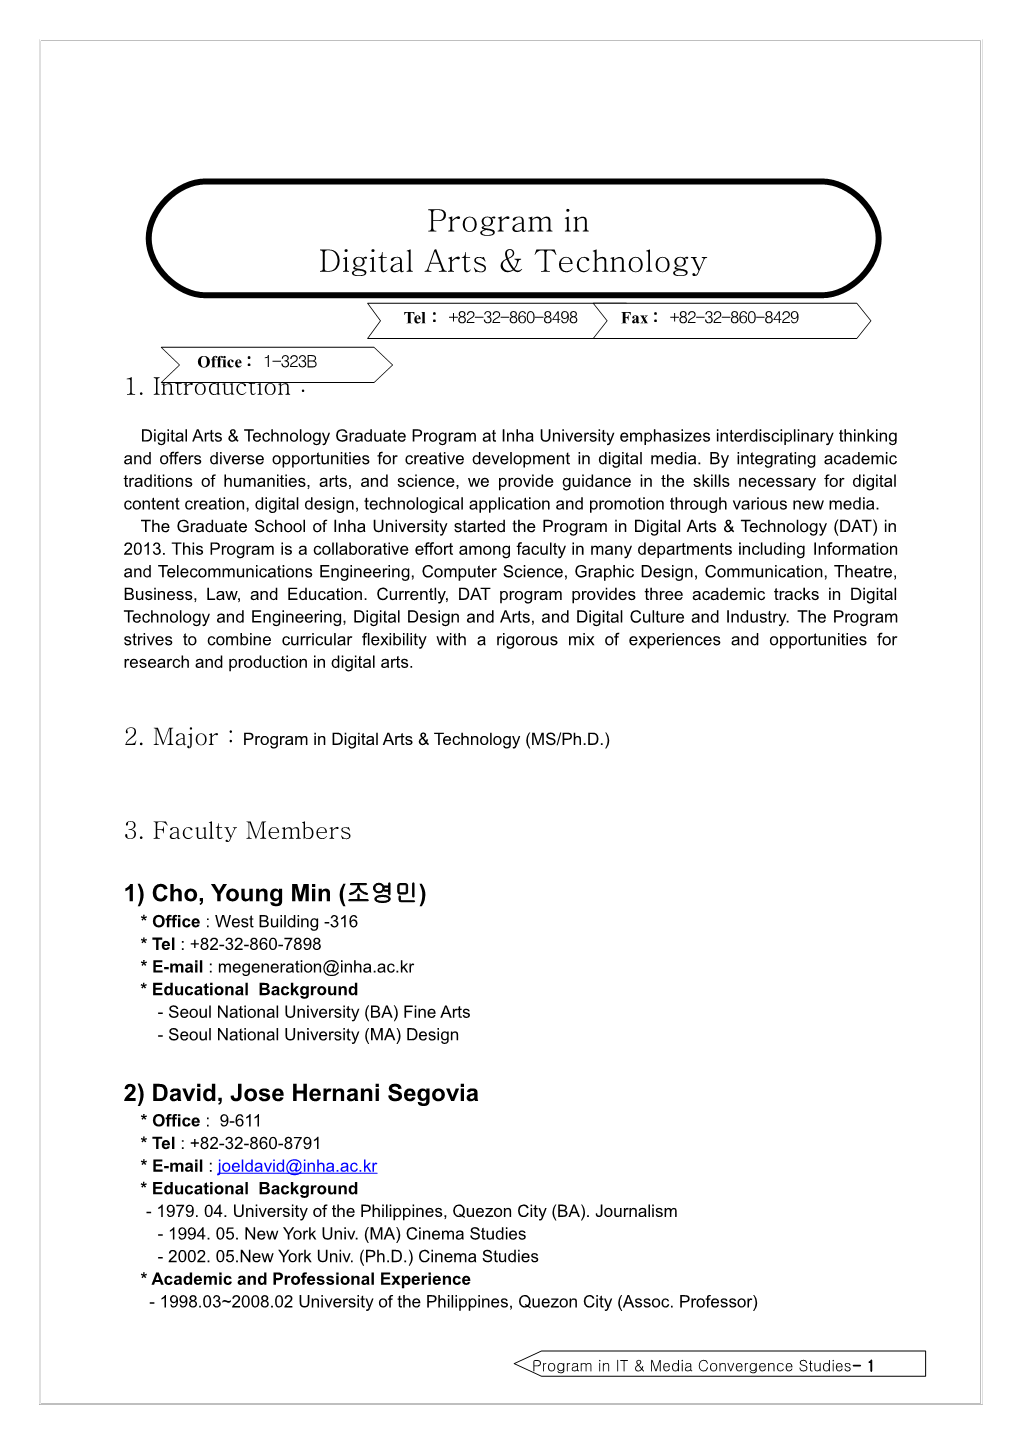 2. Major : Program in Digital Arts & Technology (MS/Ph.D.) s1